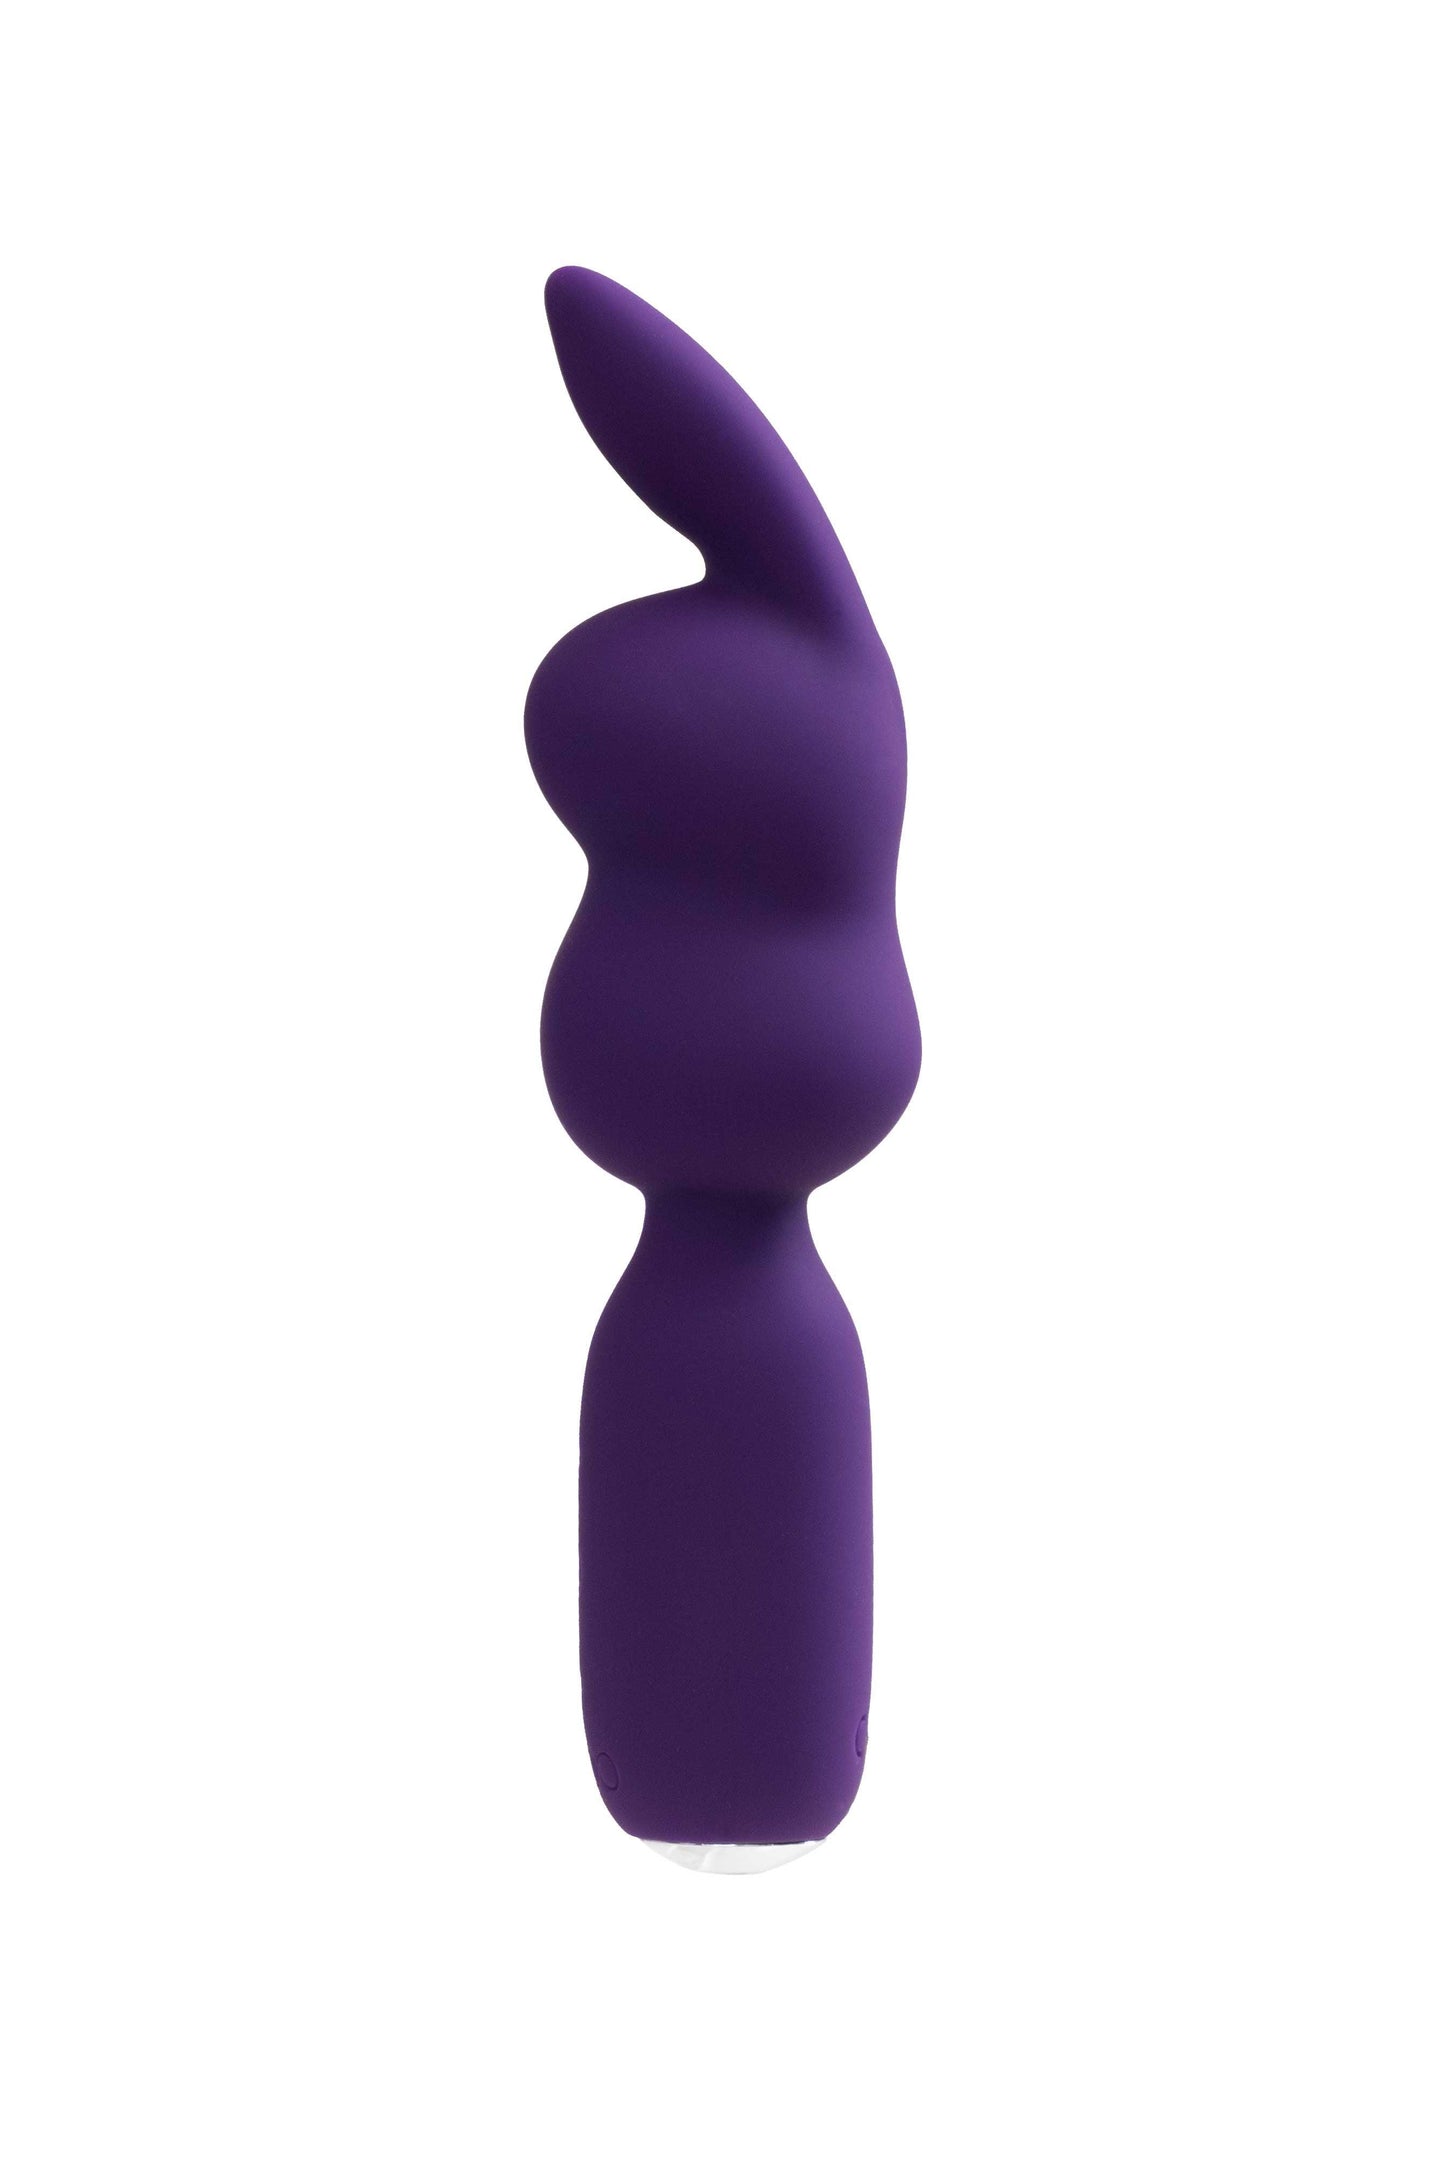 Hopper Bunny Rechargeable Mini Wand - Deep Purple - My Sex Toy Hub